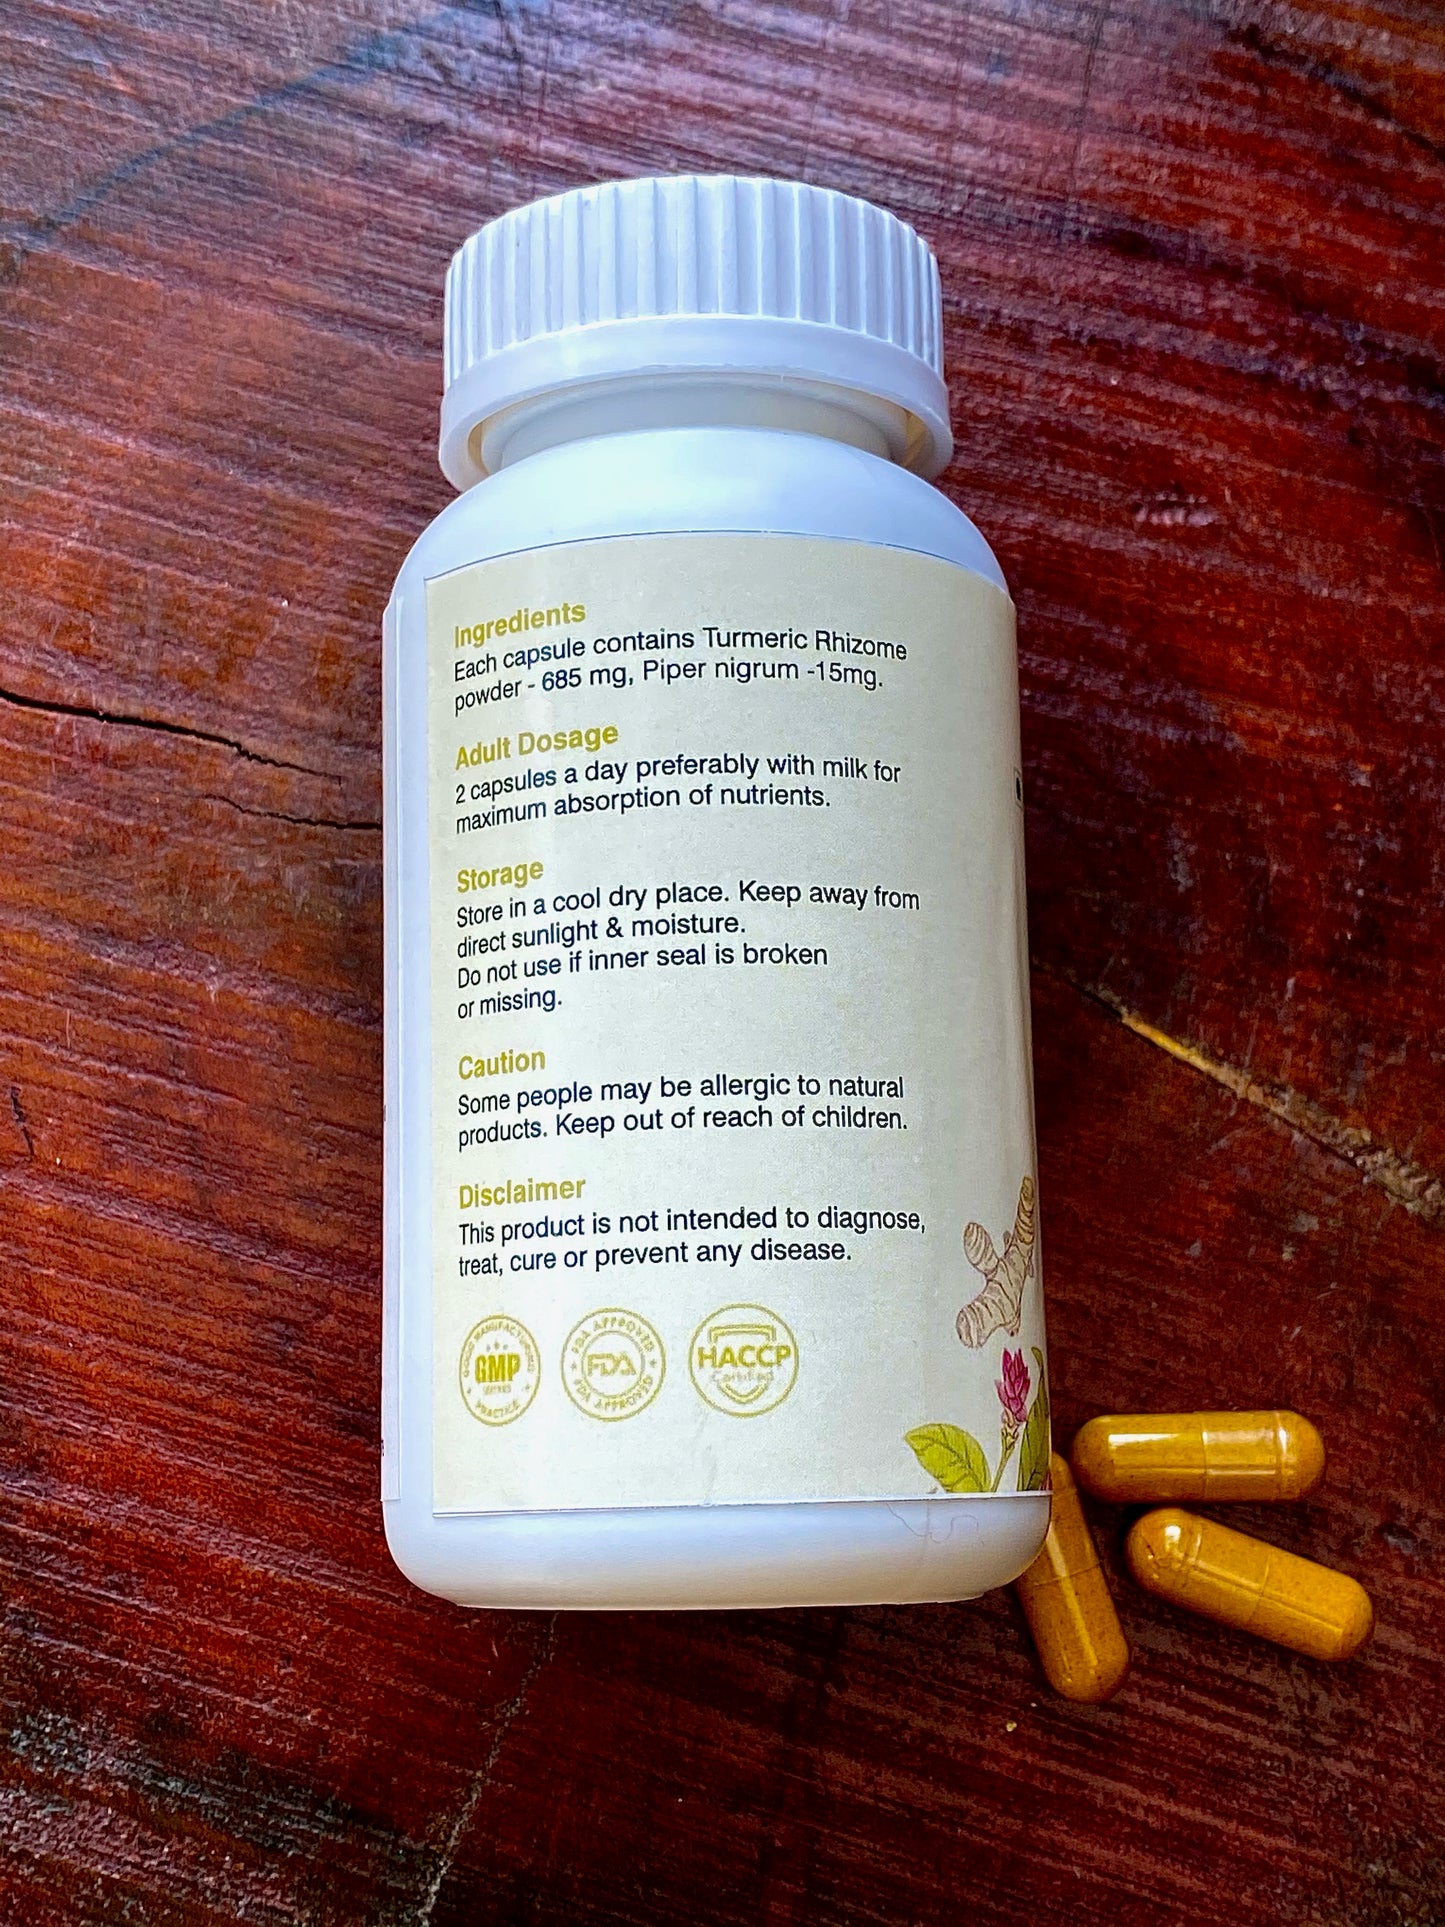 Daivik Moringa Turmeric Veg Capsules | 100% Natural | Immunity Booster, AntiInflammatory, Antioxidant | 100 Caps Each